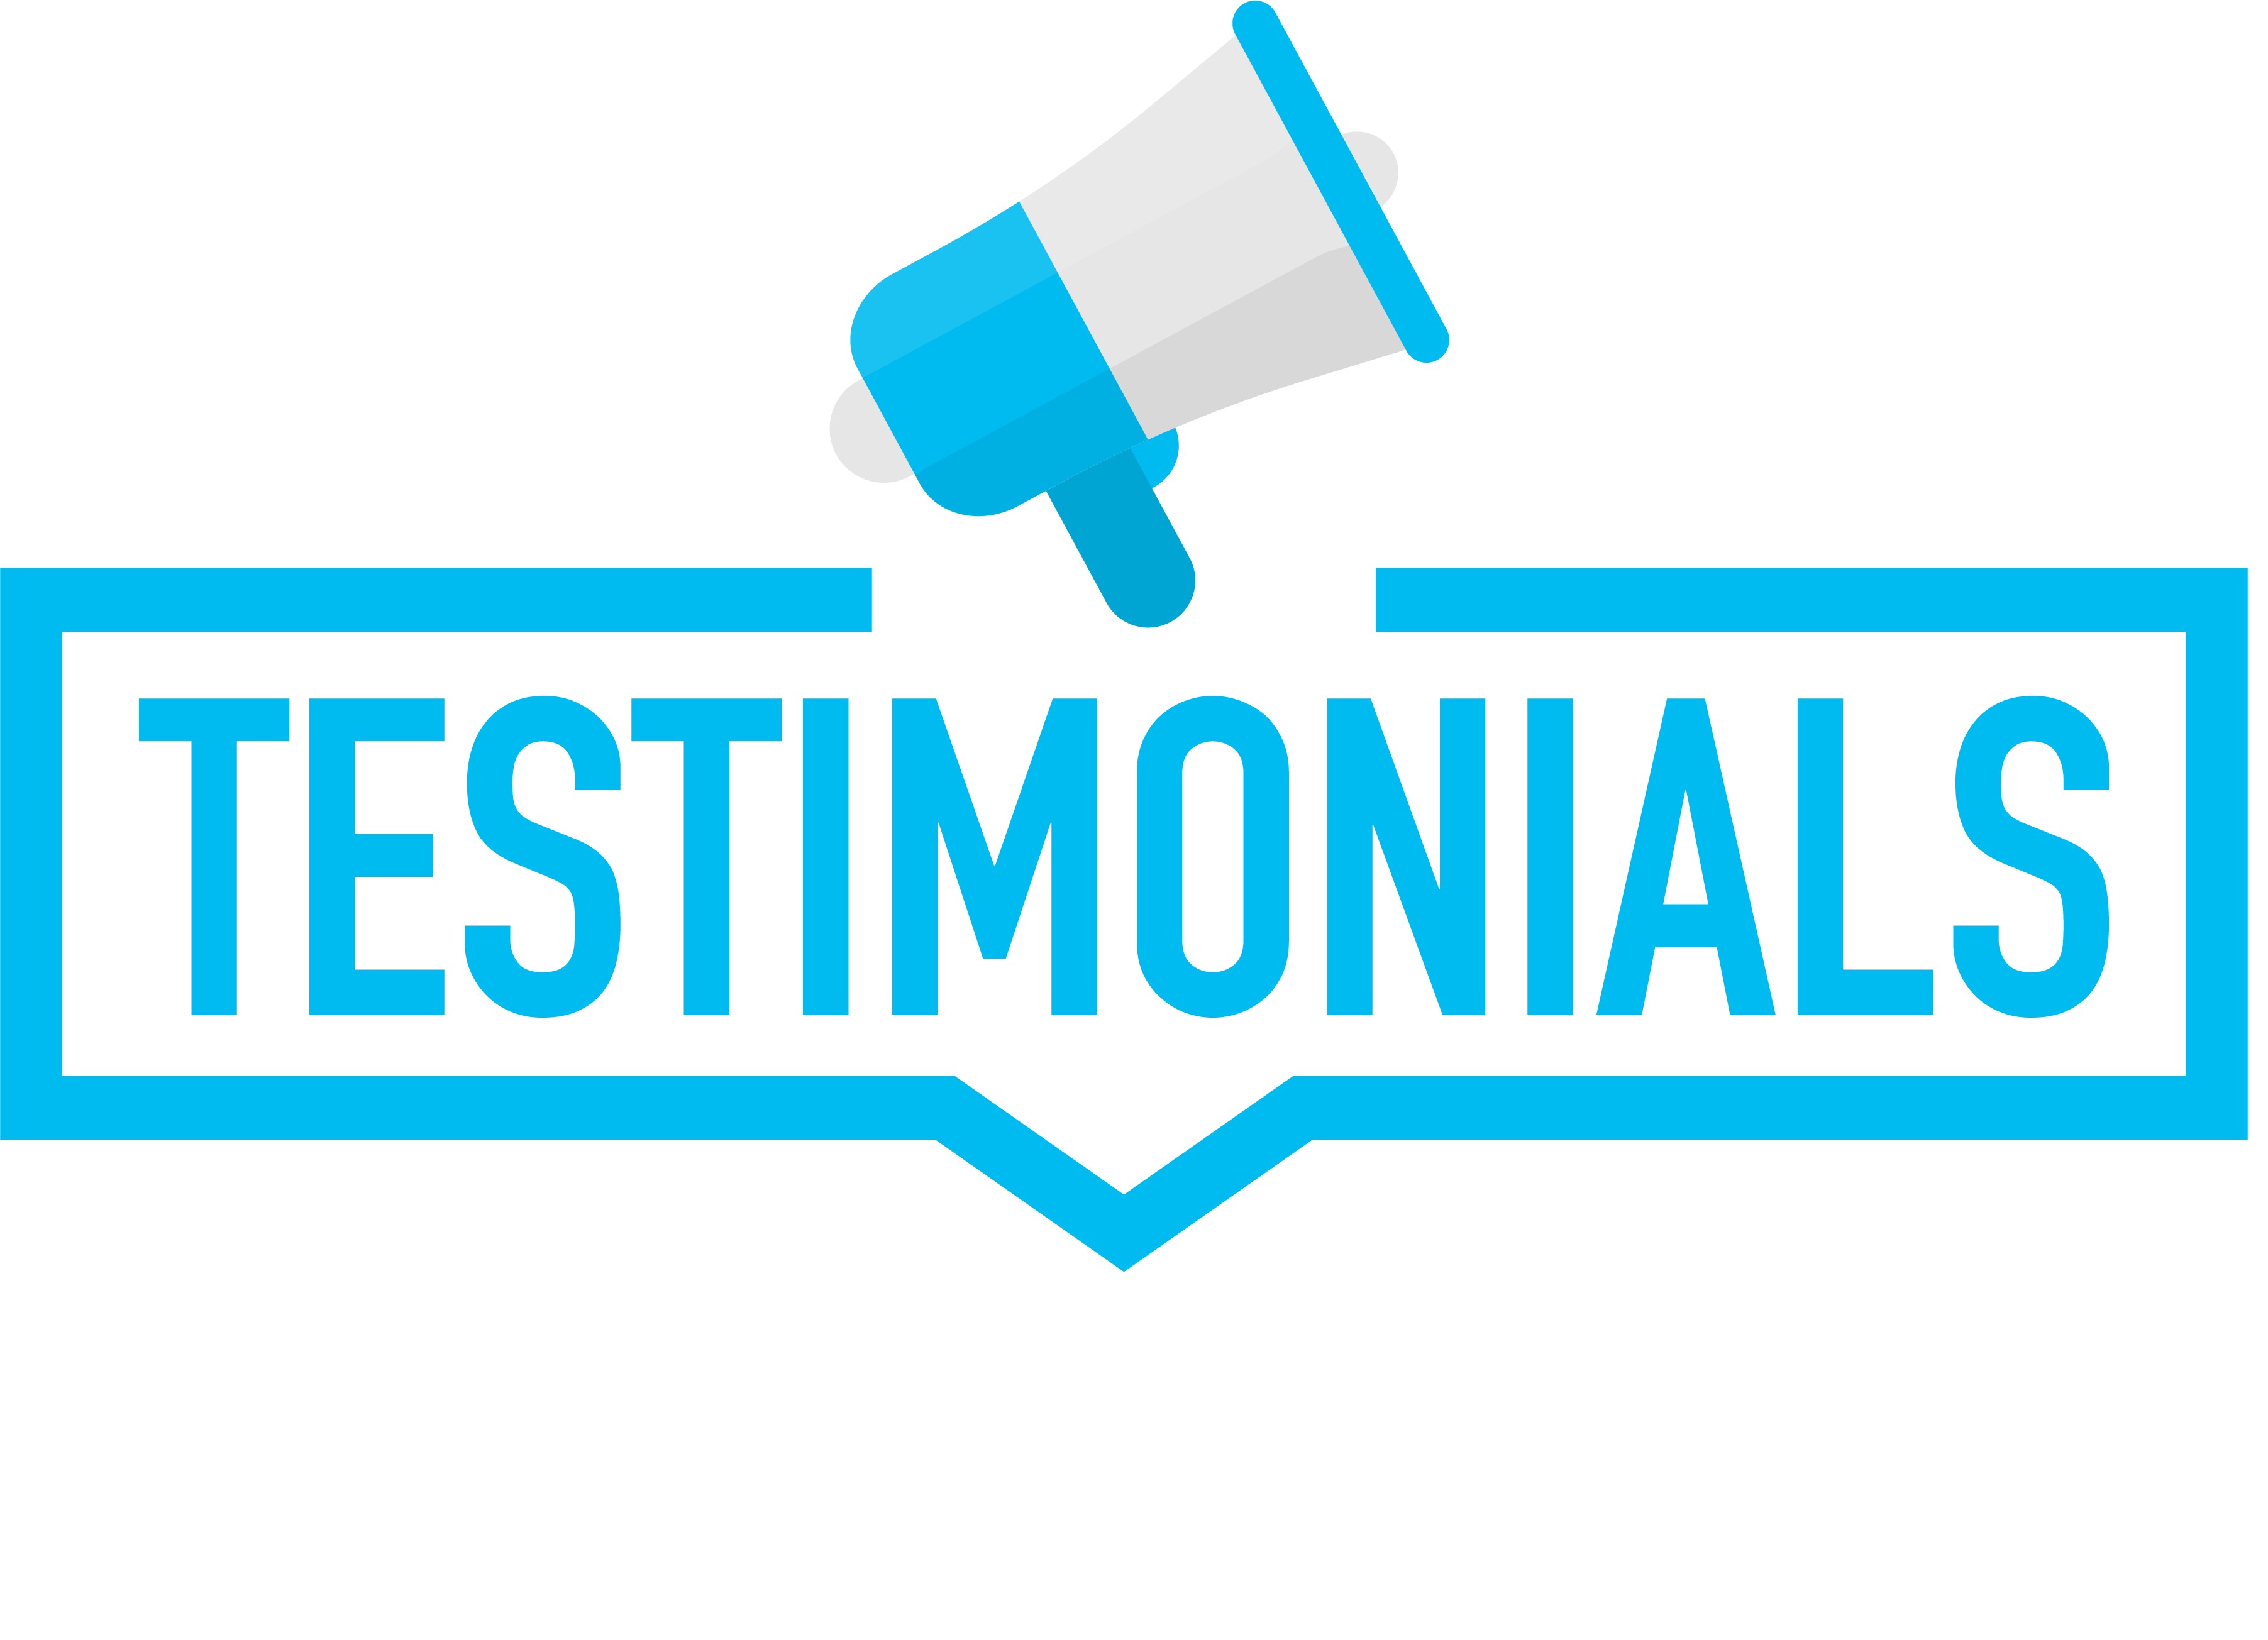 Testimonial video graphic
